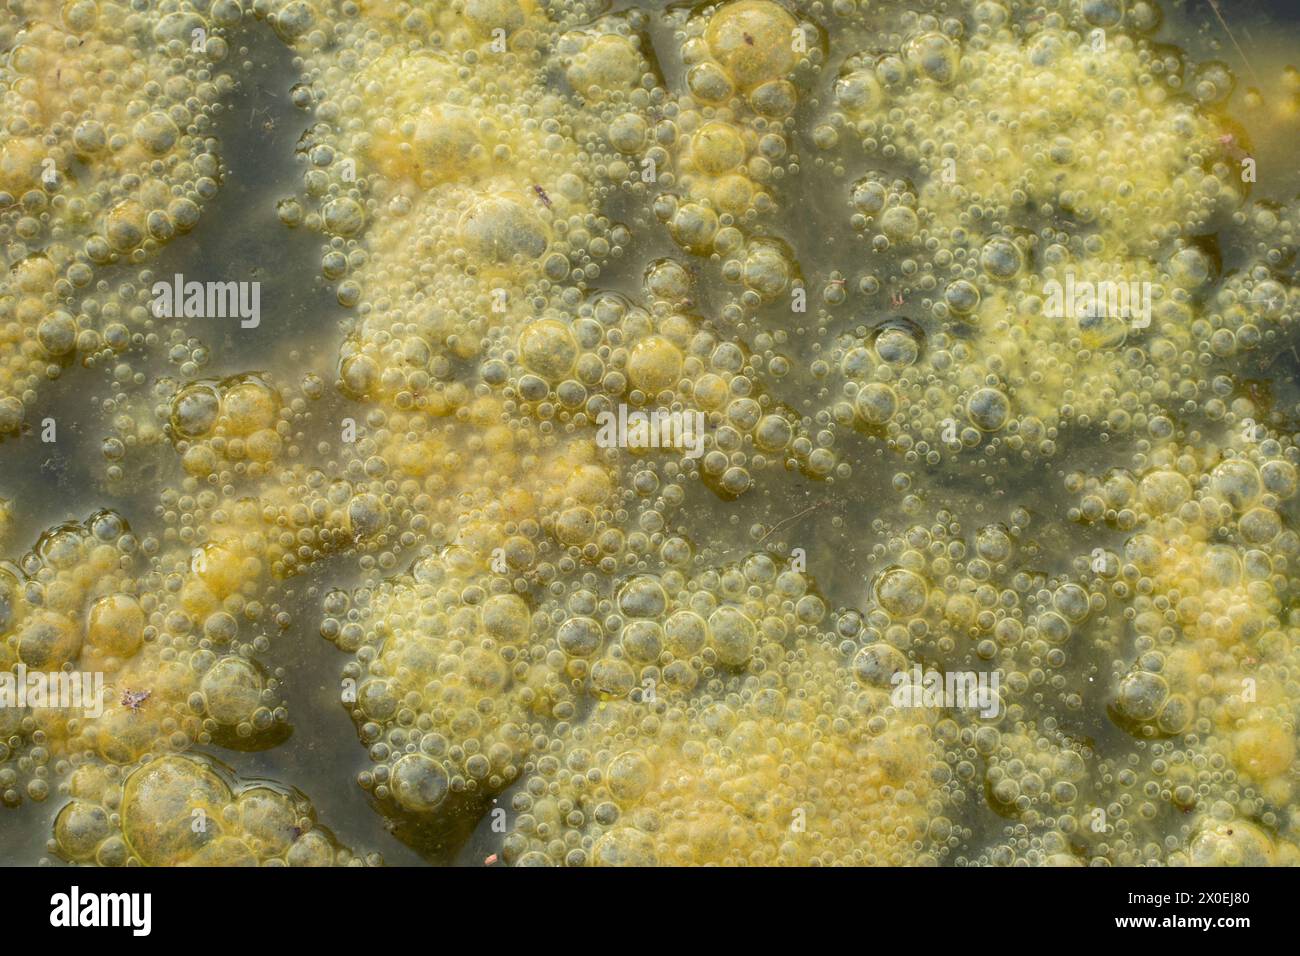 infrared image of greenish algae sludge floating on the surface of the well. Stock Photo